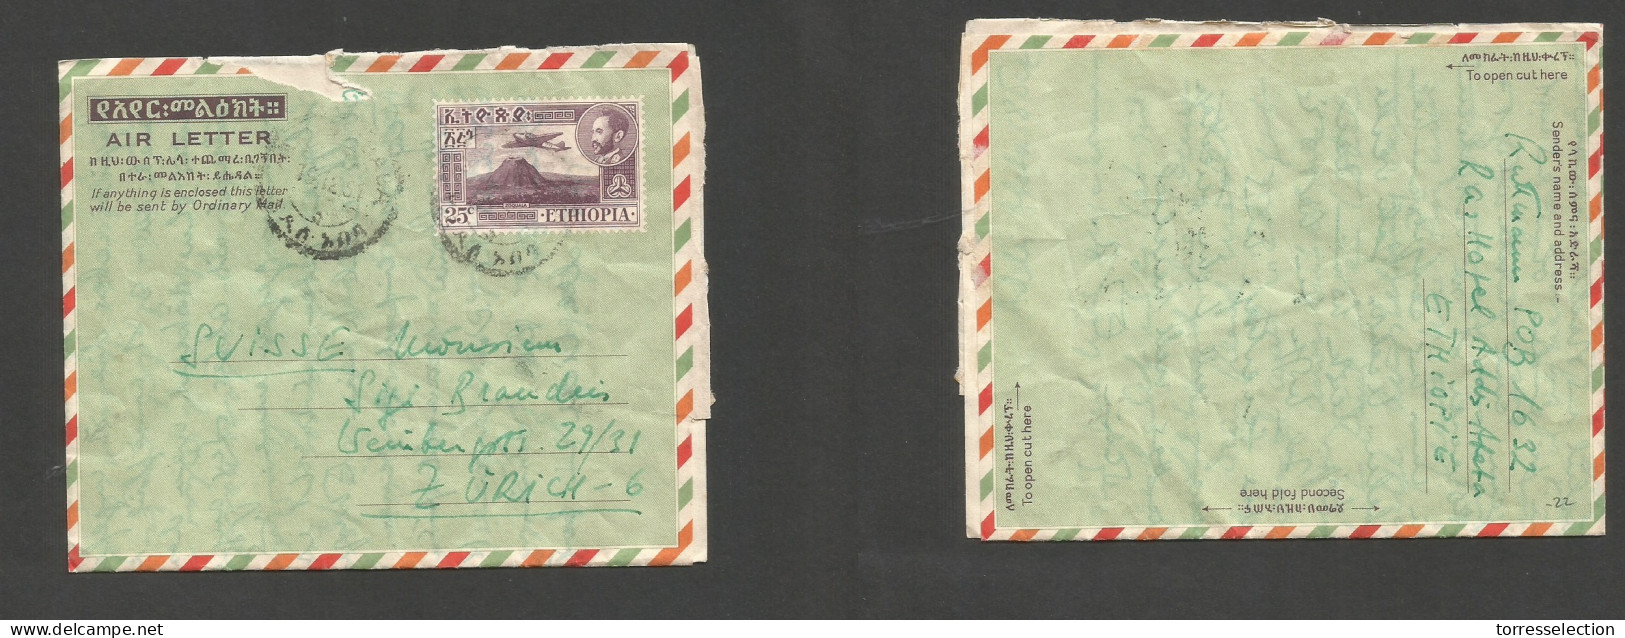 ETHIOPIA. 1951 (18-19 Dec) Addis Abeba - Switzerland, Zurich 25c Lilac Airletter Stat Sheet. With Full Contains. Scarce. - Etiopia